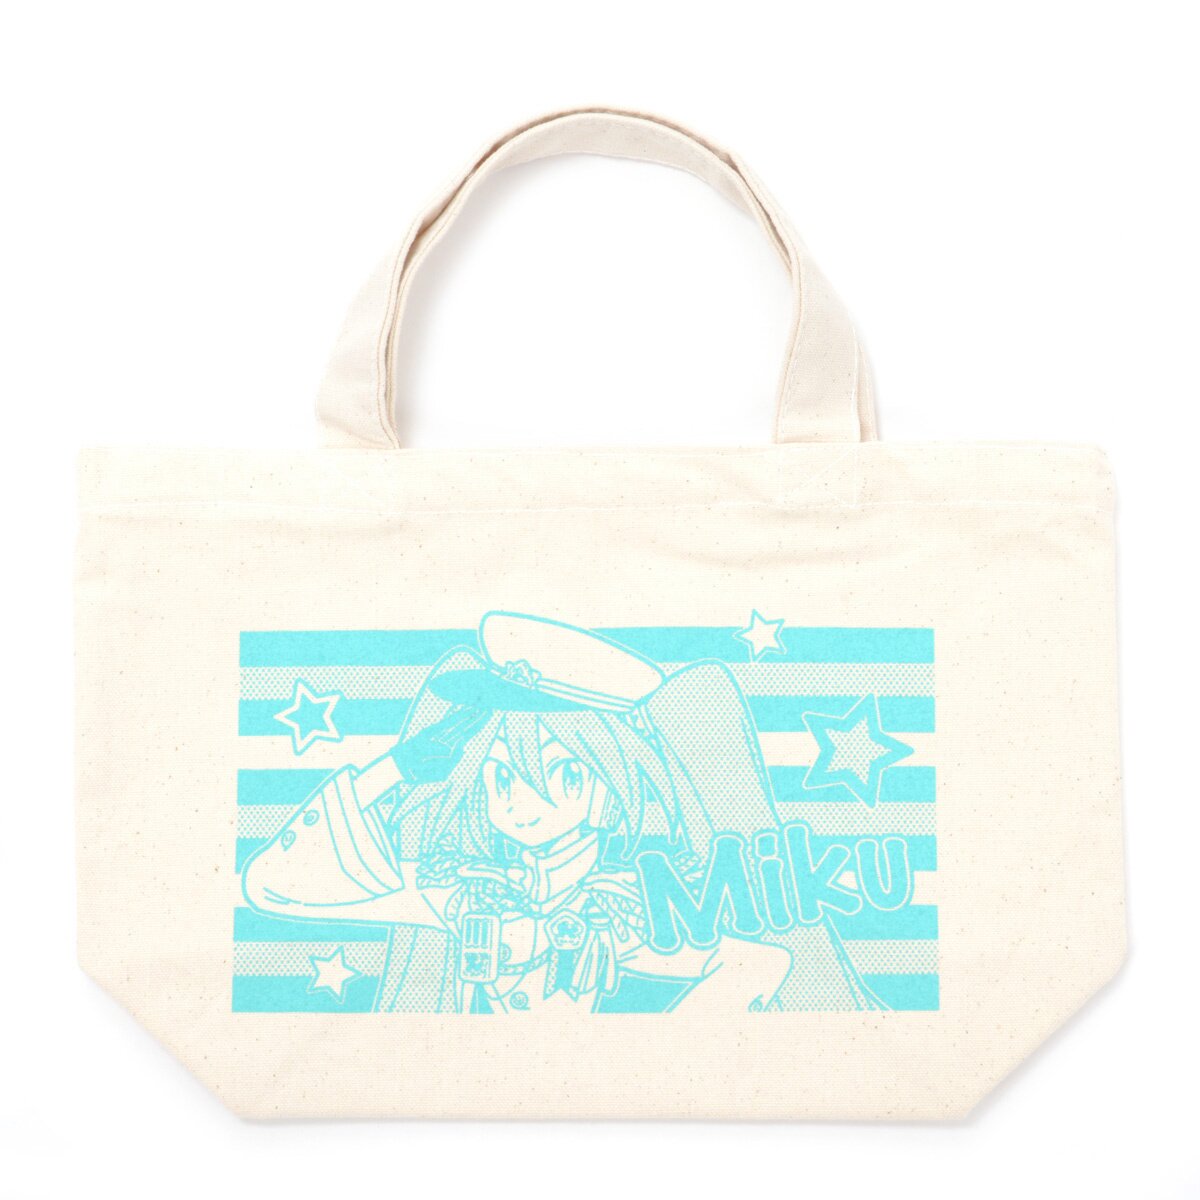 Vocaloid Lunch Tote Bags - Tokyo Otaku Mode (TOM)